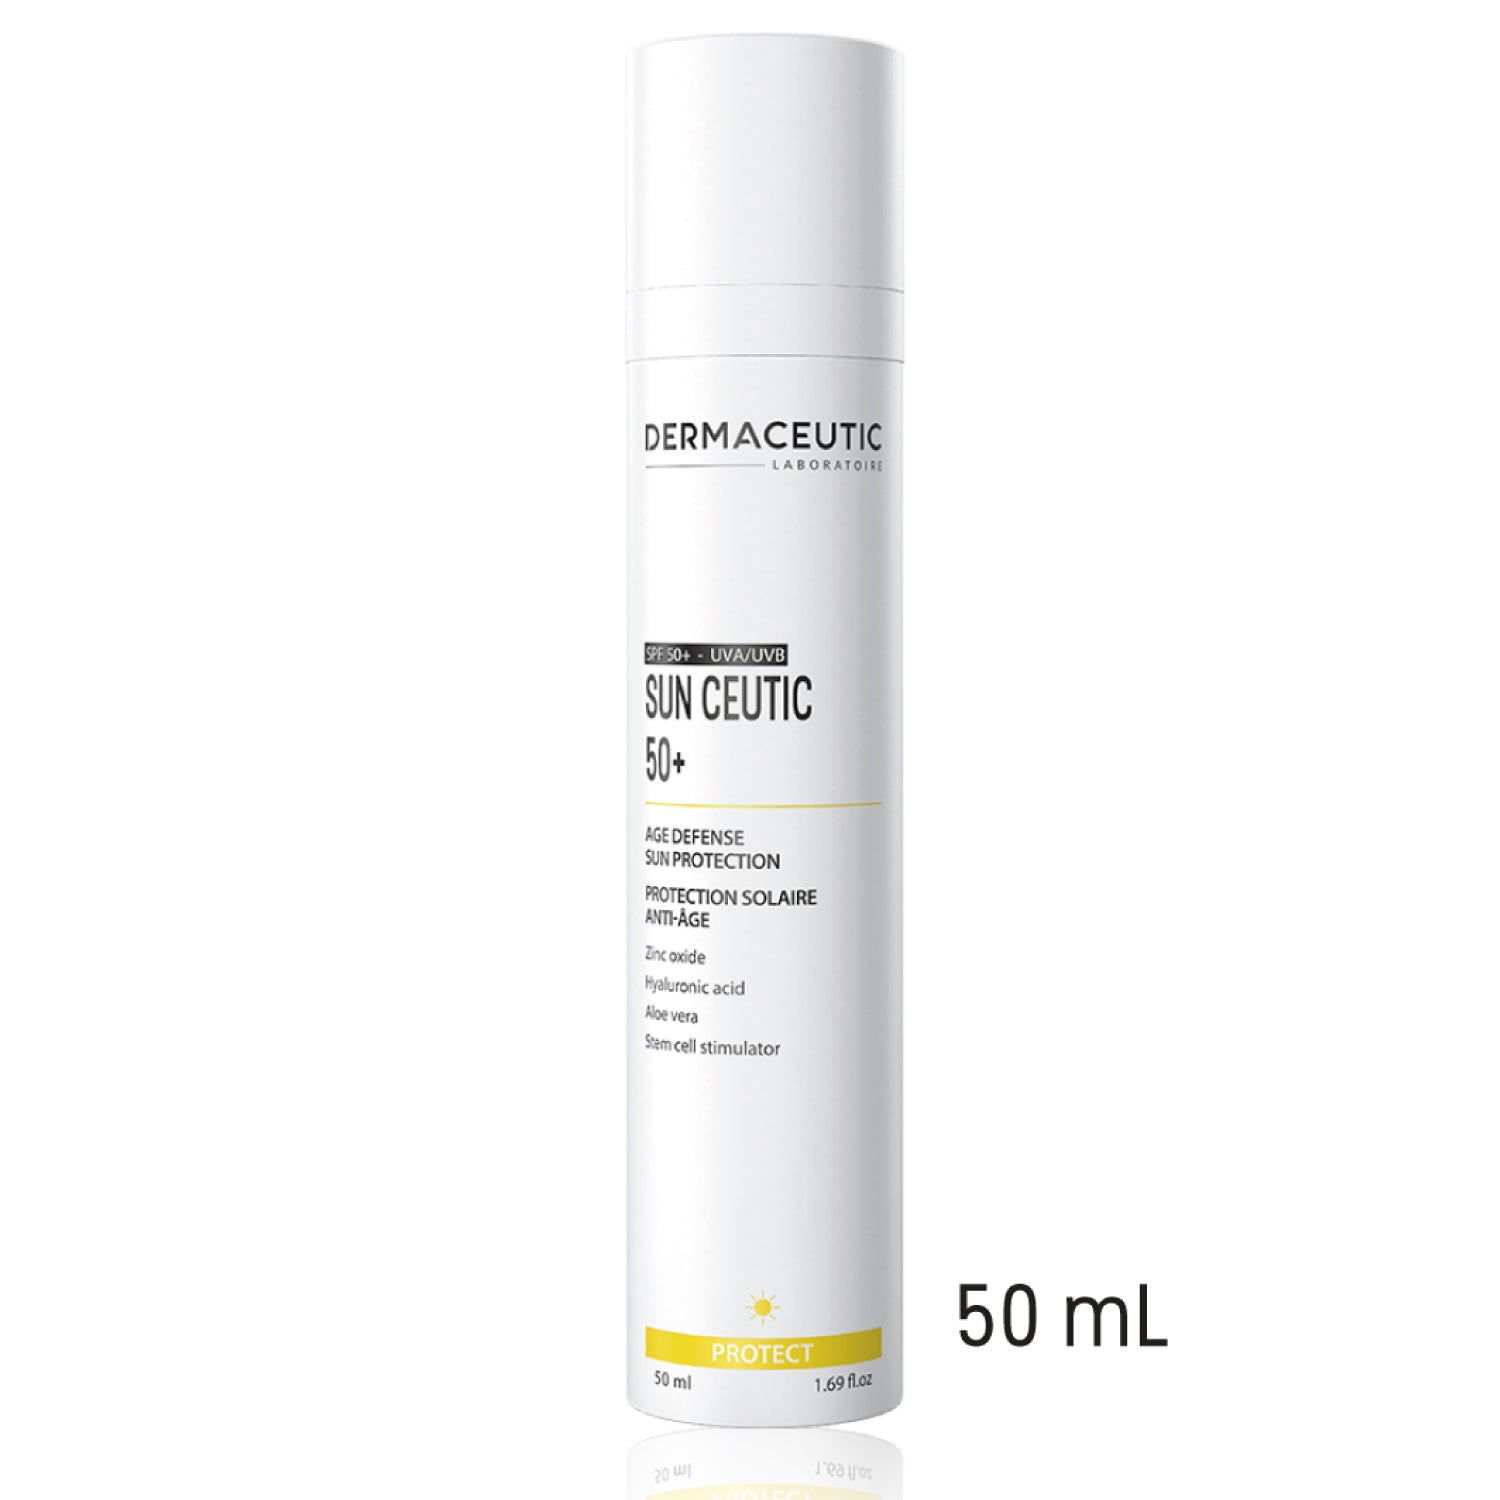 Dermaceutic Sun Ceutic - SPF 50+ Sun Block and Protection